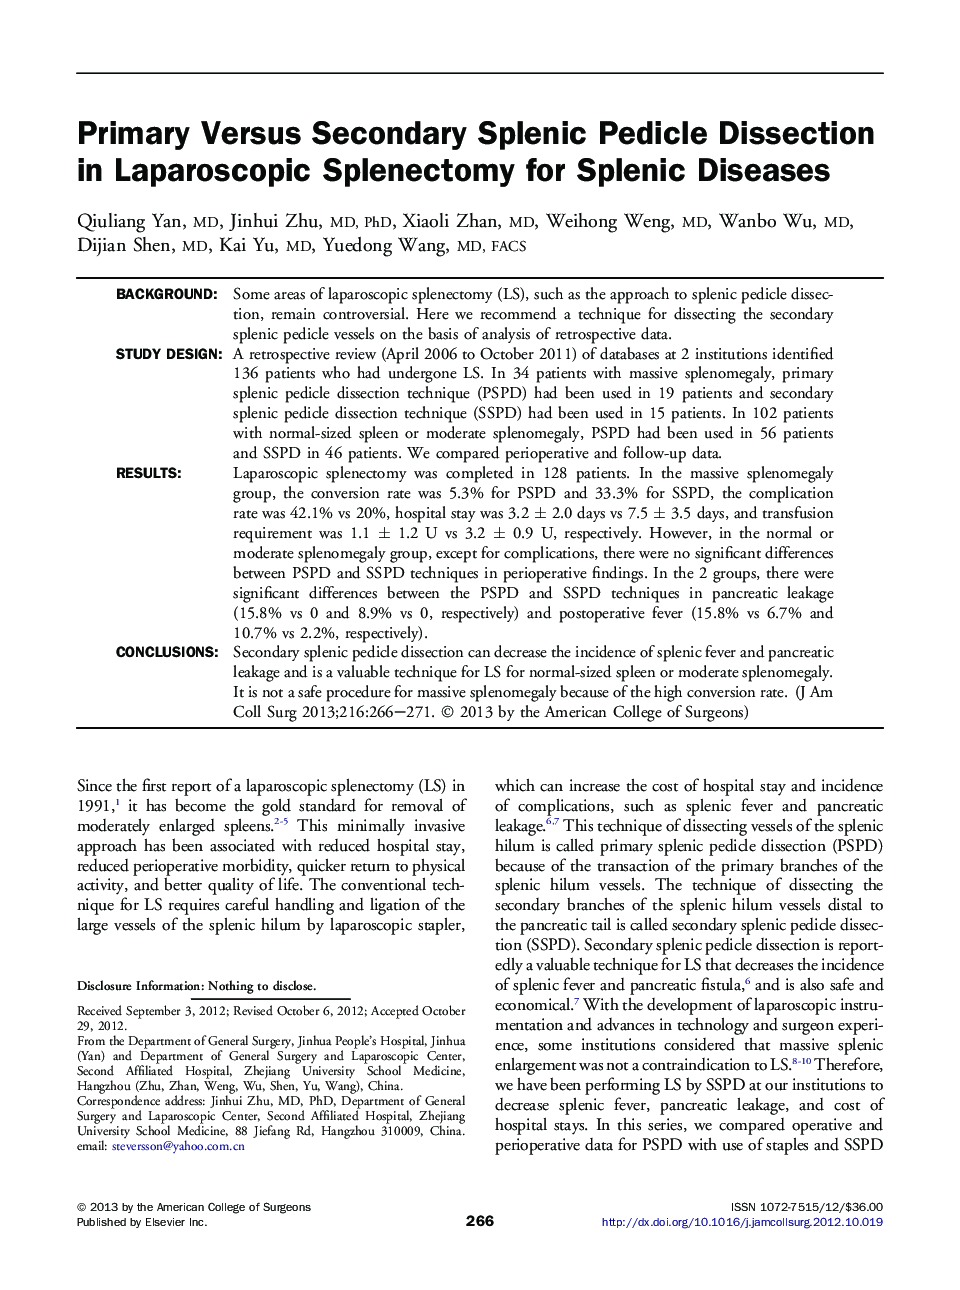 Primary Versus Secondary Splenic Pedicle Dissection in Laparoscopic Splenectomy for Splenic Diseases 